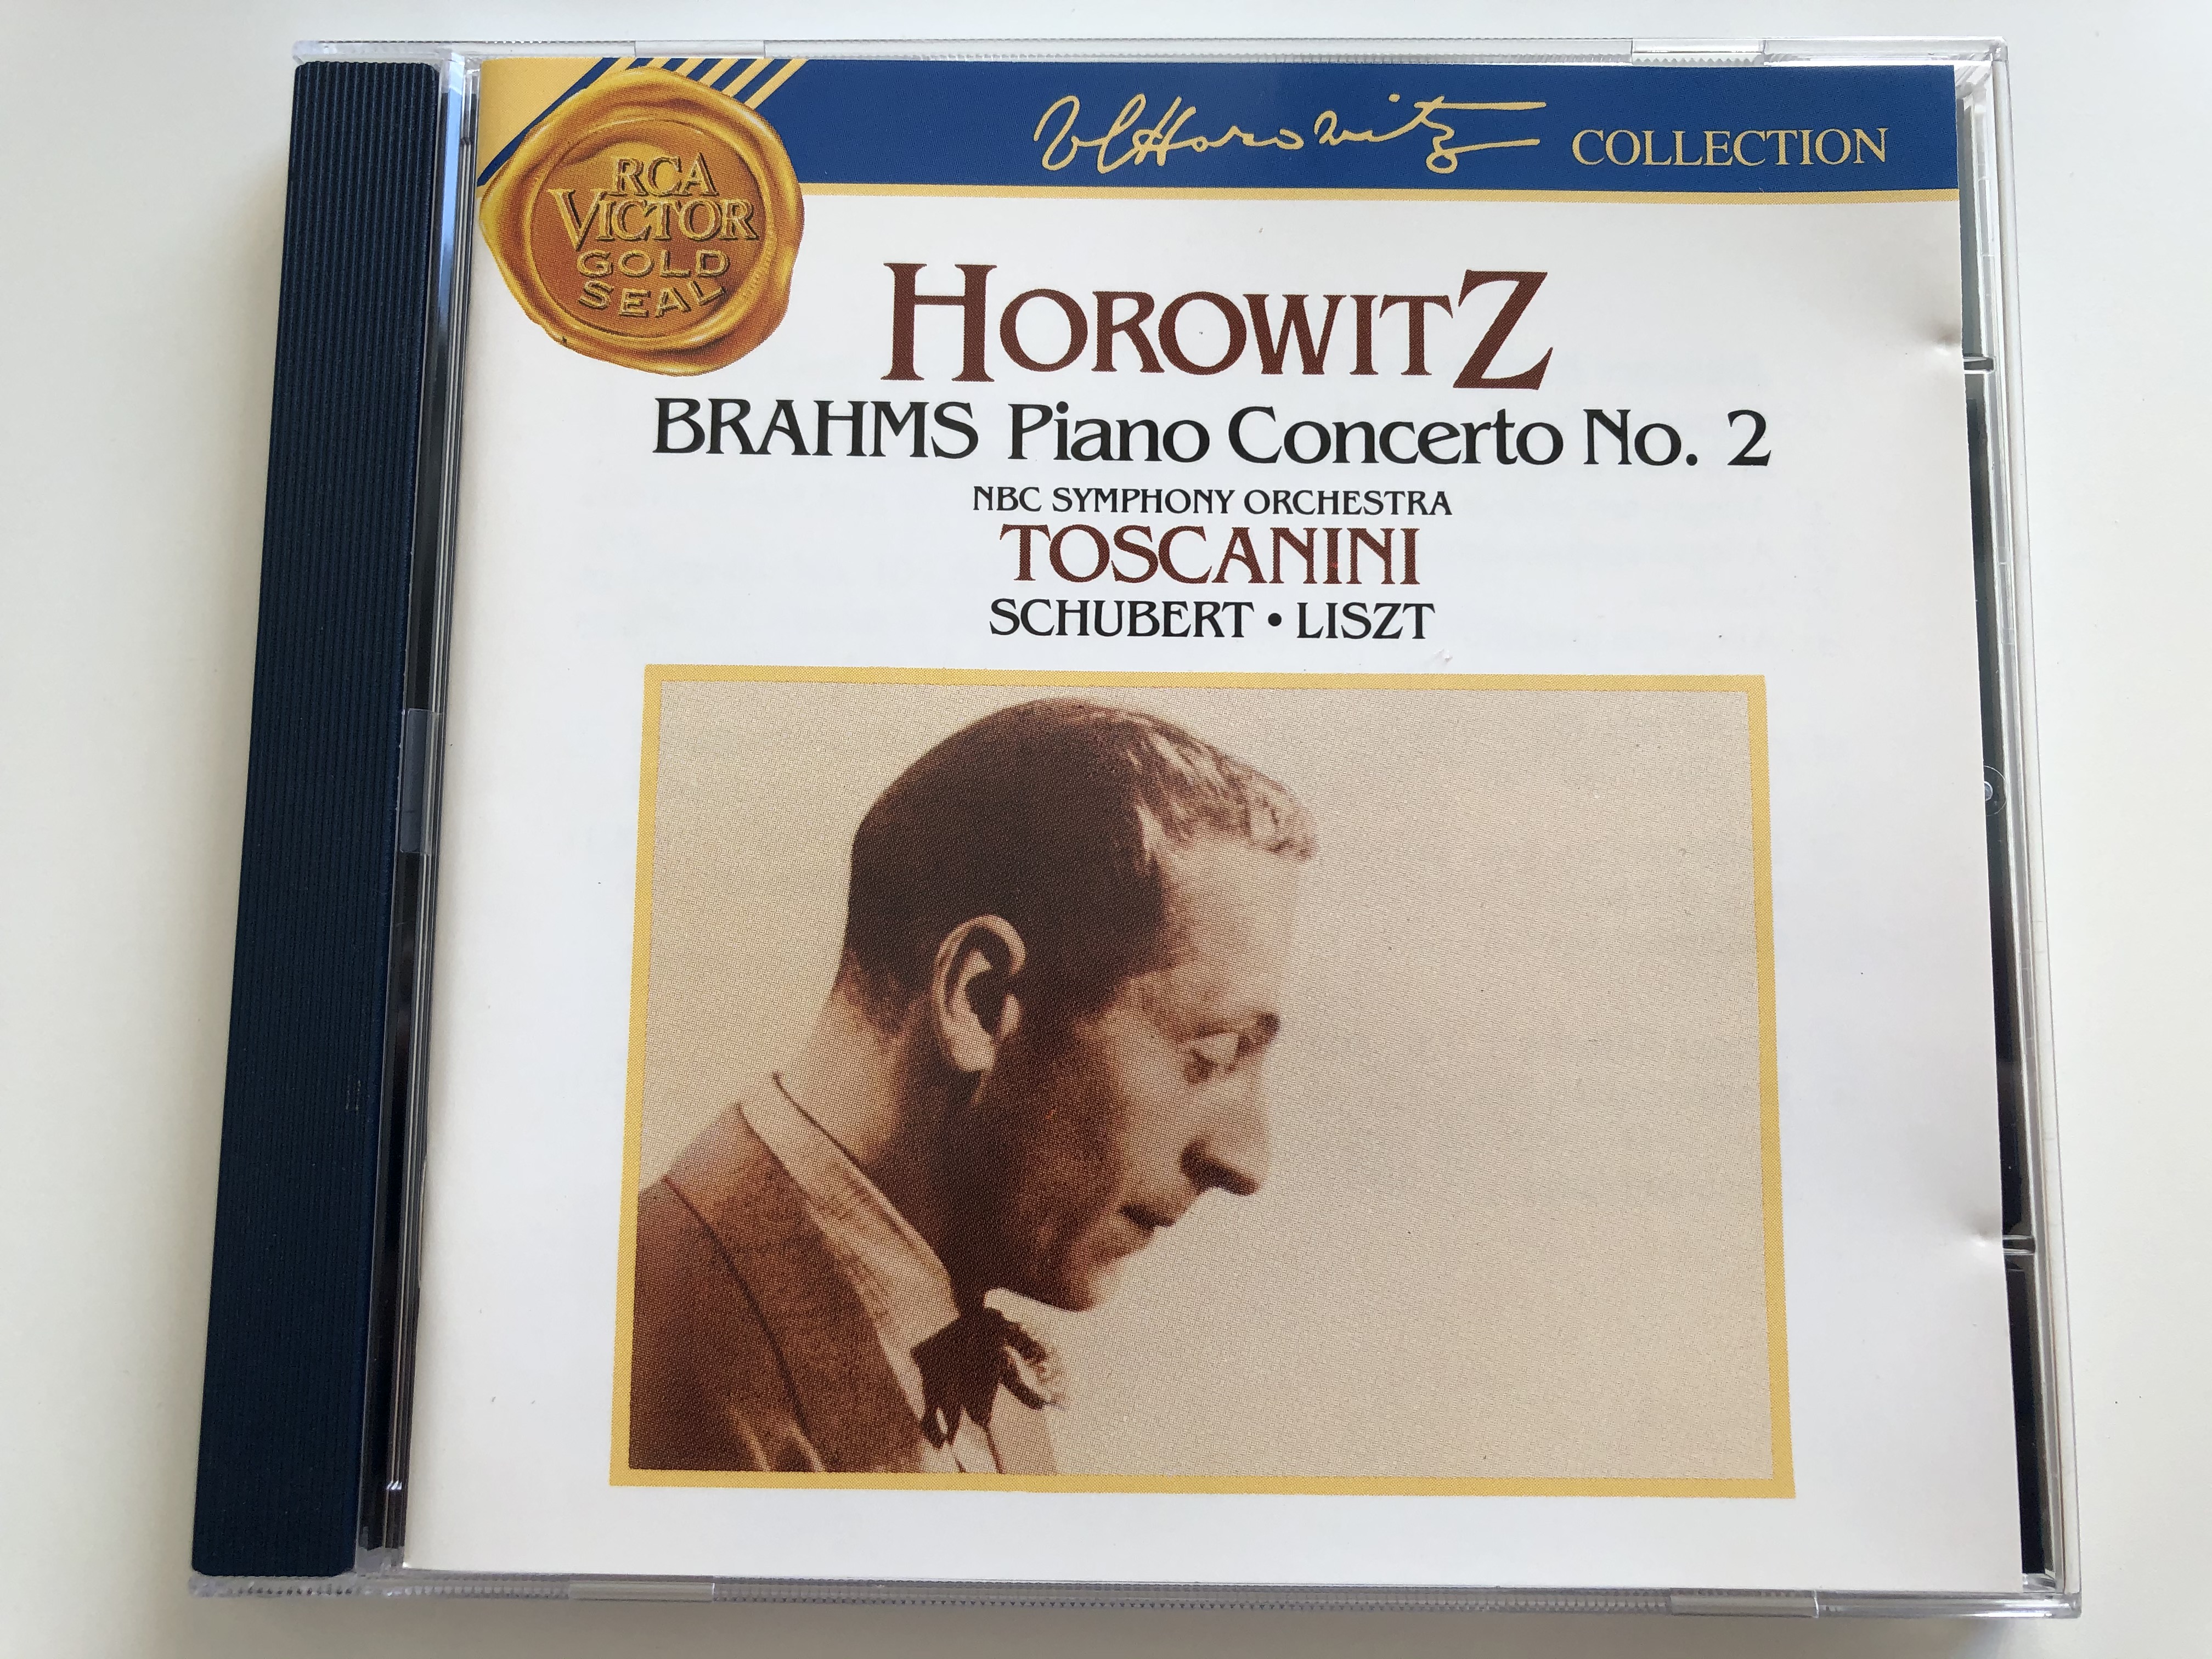 horowitz-brahms-piano-concerto-no.-2-nbc-symphony-orchestra-toscanini-schubert-liszt-rca-victor-gold-seal-audio-cd-1991-mono-gd60523-1-.jpg